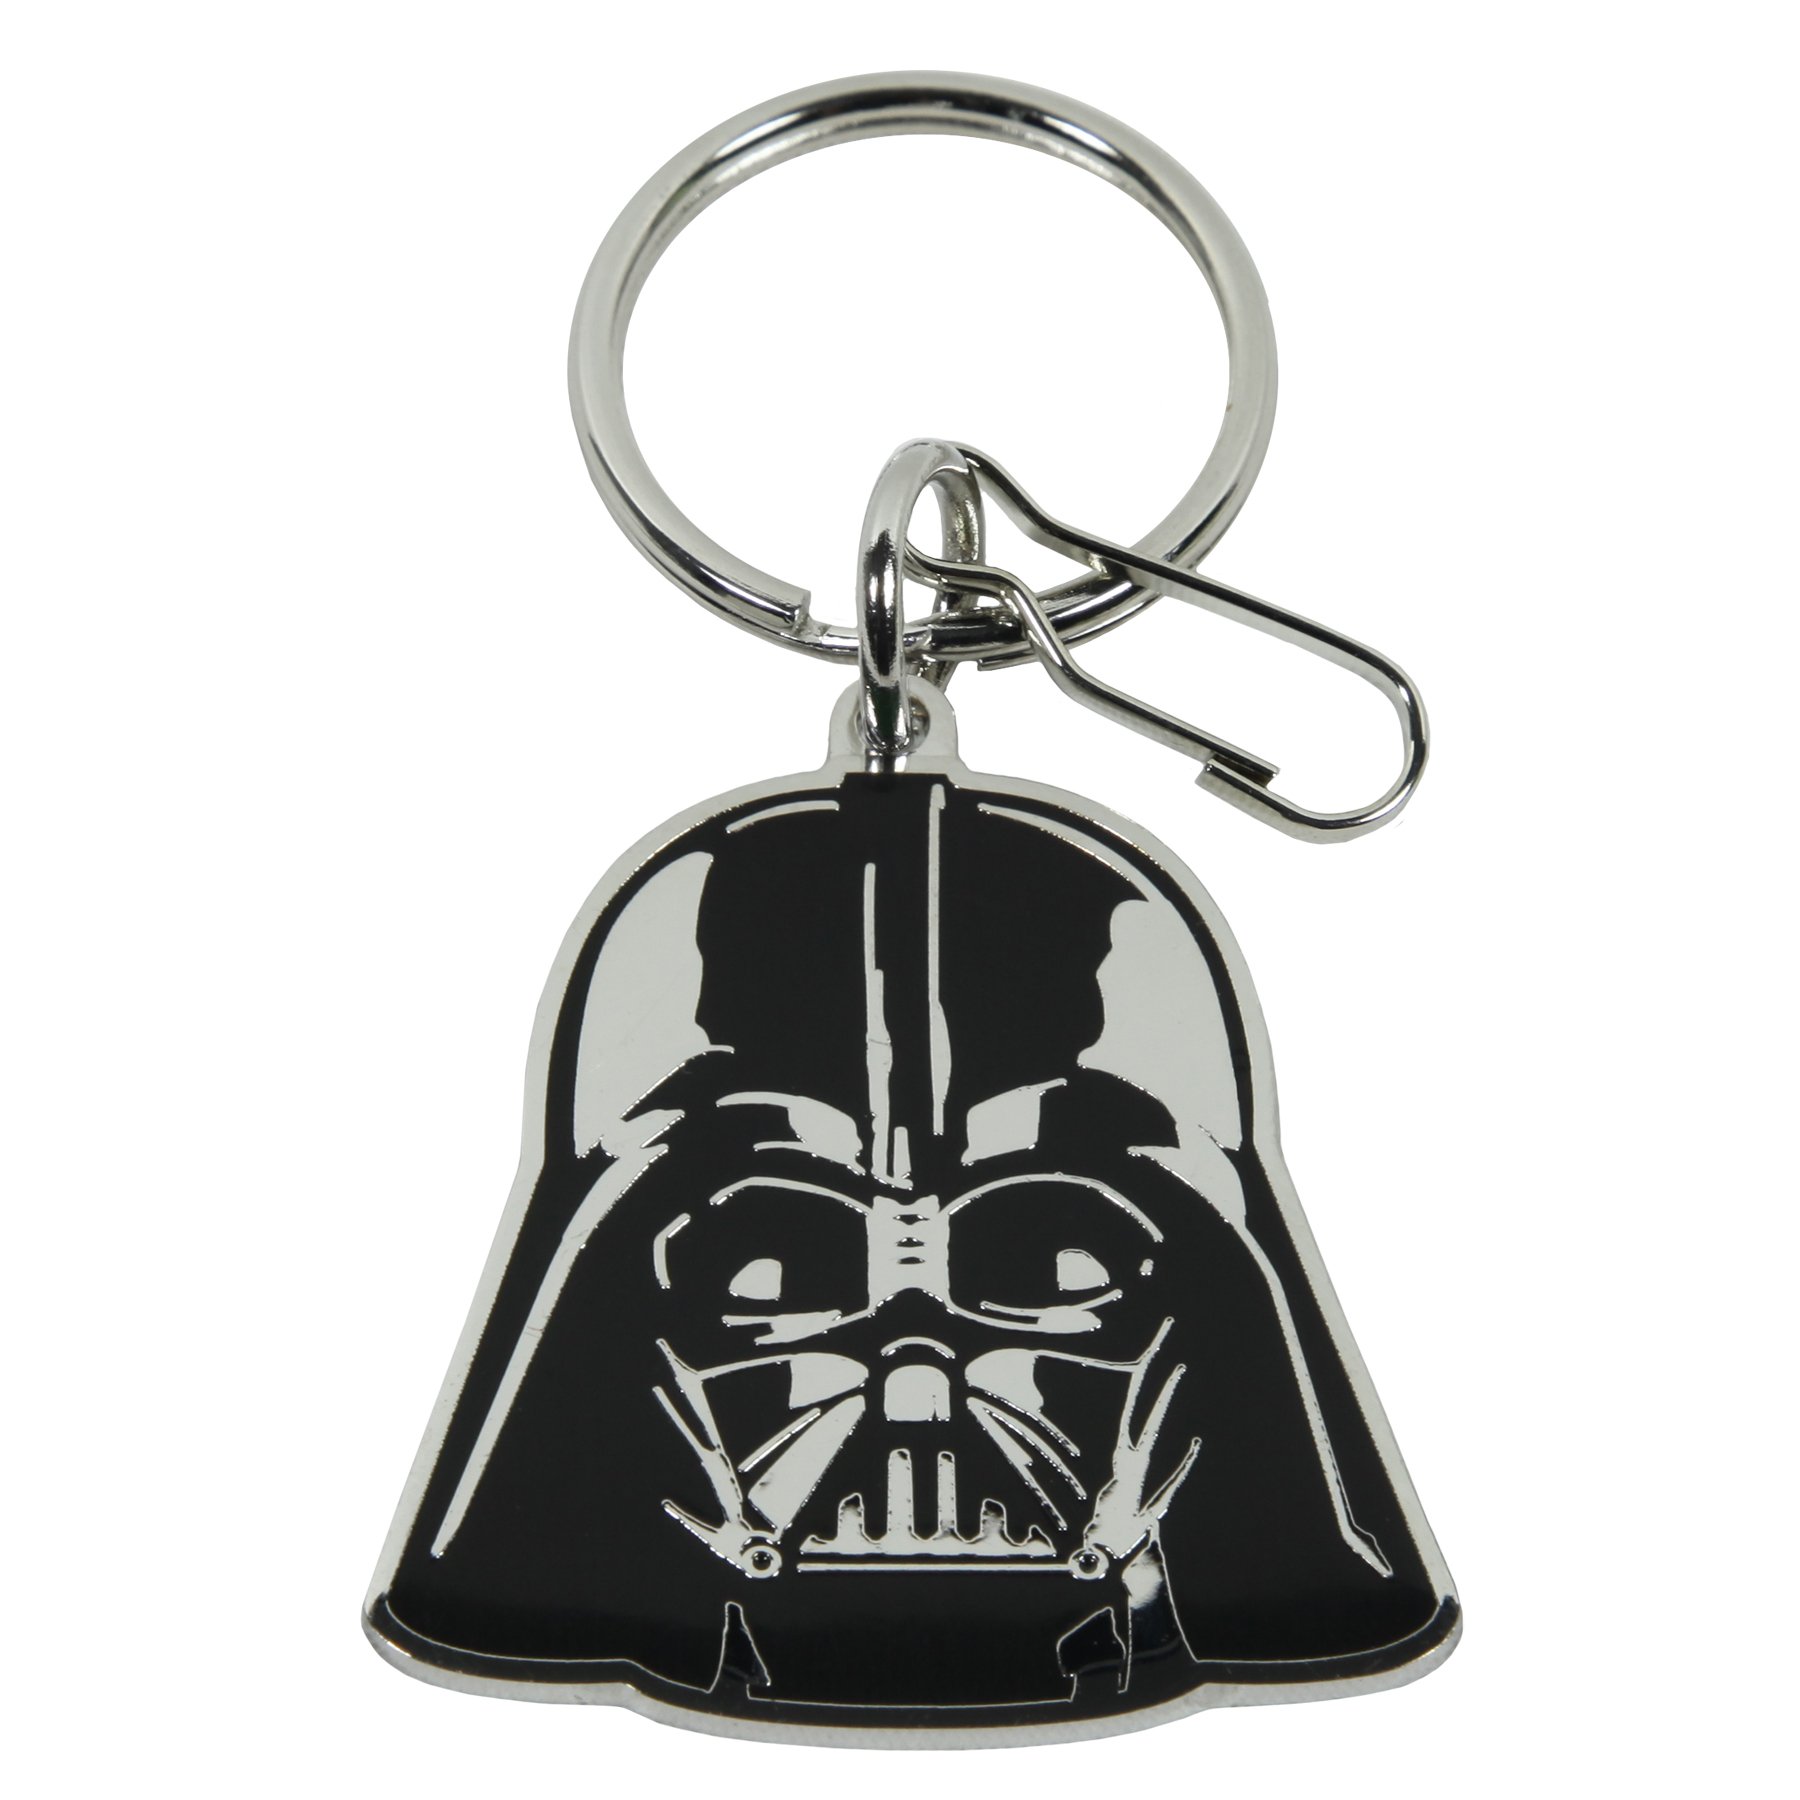 Plasticolor 004292R01 Star Wars Darth Vader Schlüsselanhänger von Plasticolor